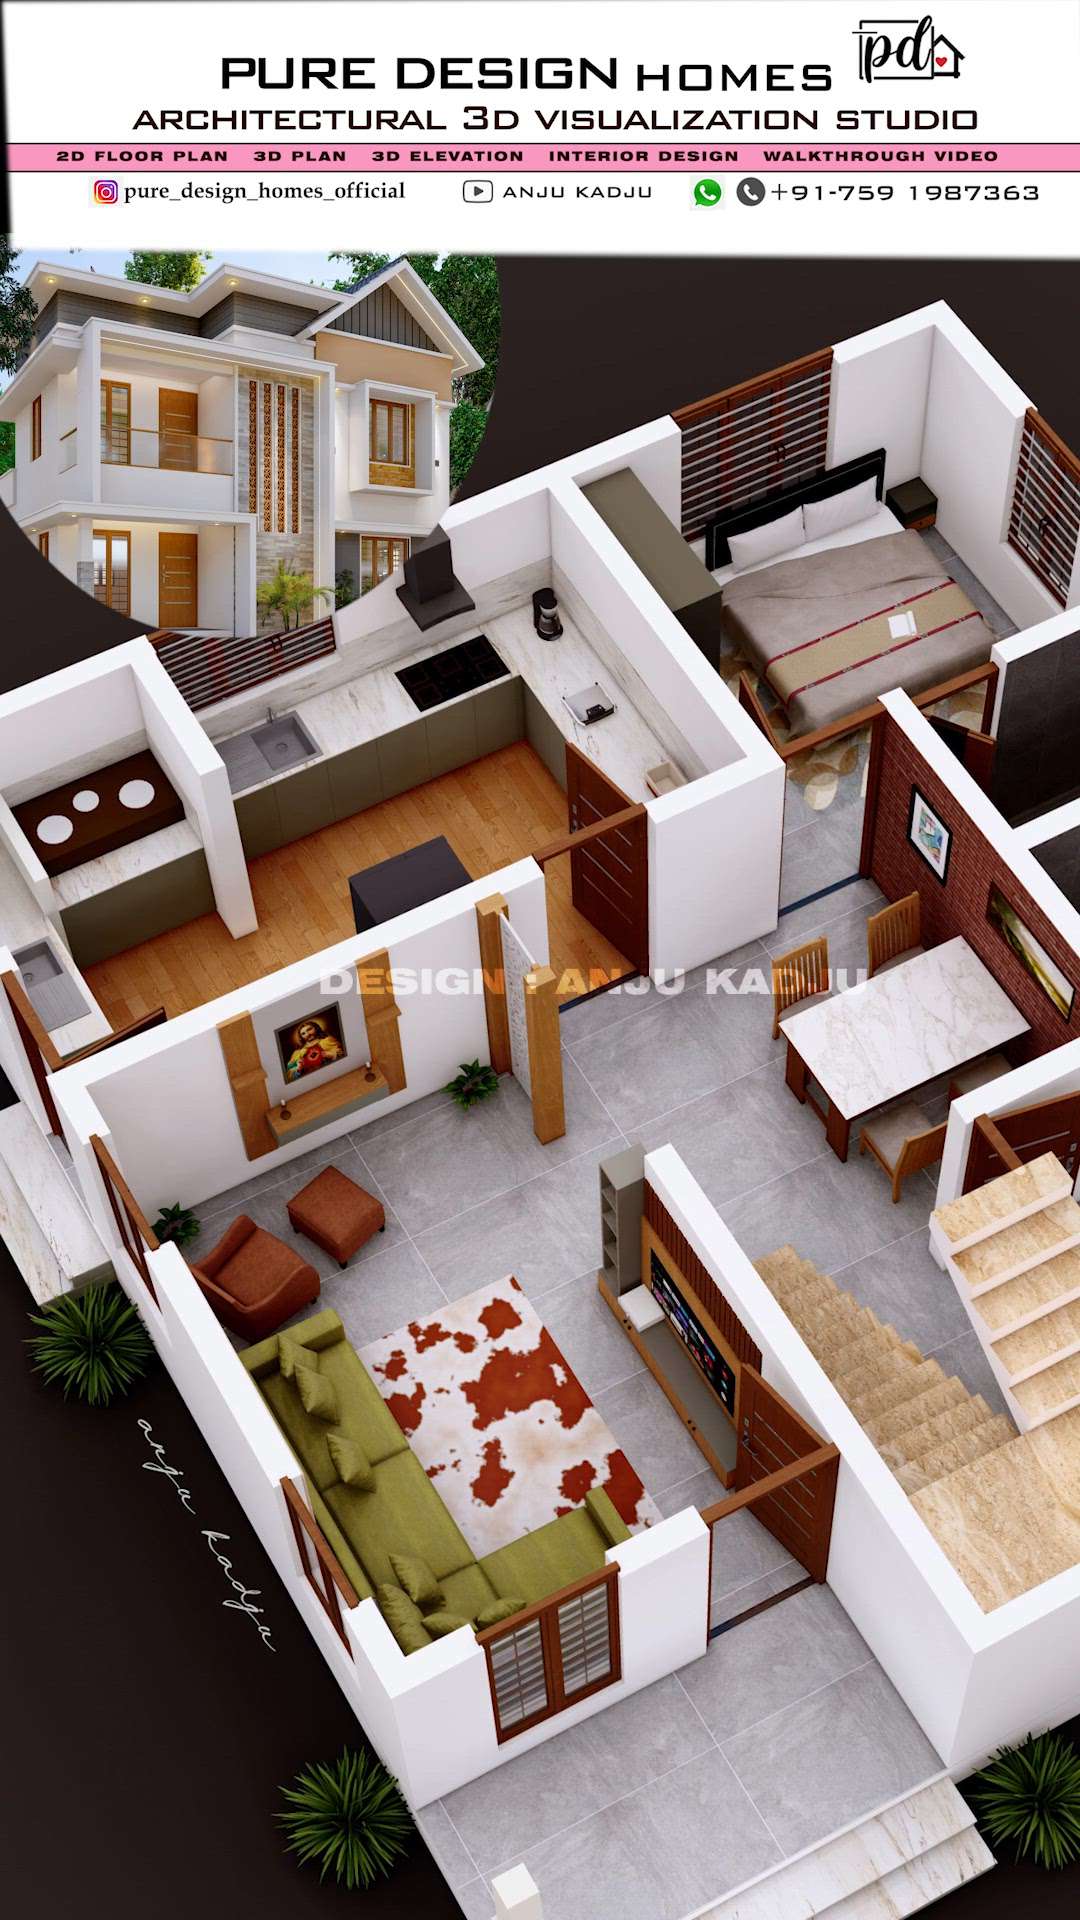 Kerala house design
3 bhk 3d plan with elevation.
Designed by anju kadju
+917591987363
#3dplan #housedesign #3delevation #2bhk #singlefloor #house #kerala #online3ddesigner #anjukadju #best3ddesigner

വീടിന്റെ architectural സംബന്ധമായ plan, 3d plan, 3d elevation, interior design, walkthrogh video തുടങ്ങിയ services ആണ് ഞങ്ങളിൽ നിന്നും നിങ്ങൾക്കു ലഭിക്കുക.
കൂടുതൽ വിവരങ്ങൾക്ക് ഞങ്ങളുടെ whatsapp / instagramil ബന്ധപ്പെടാം 👍🏻.
കൃത്യമായി എന്താണ് ആവശ്യം എന്ന് 🙏🏻ചേർത്ത് ലഭിക്കുന്ന എല്ലാം message കൾക്കും ഞങ്ങൾ reply നൽകുന്നതാണ് 👍🏻👍🏻👍🏻